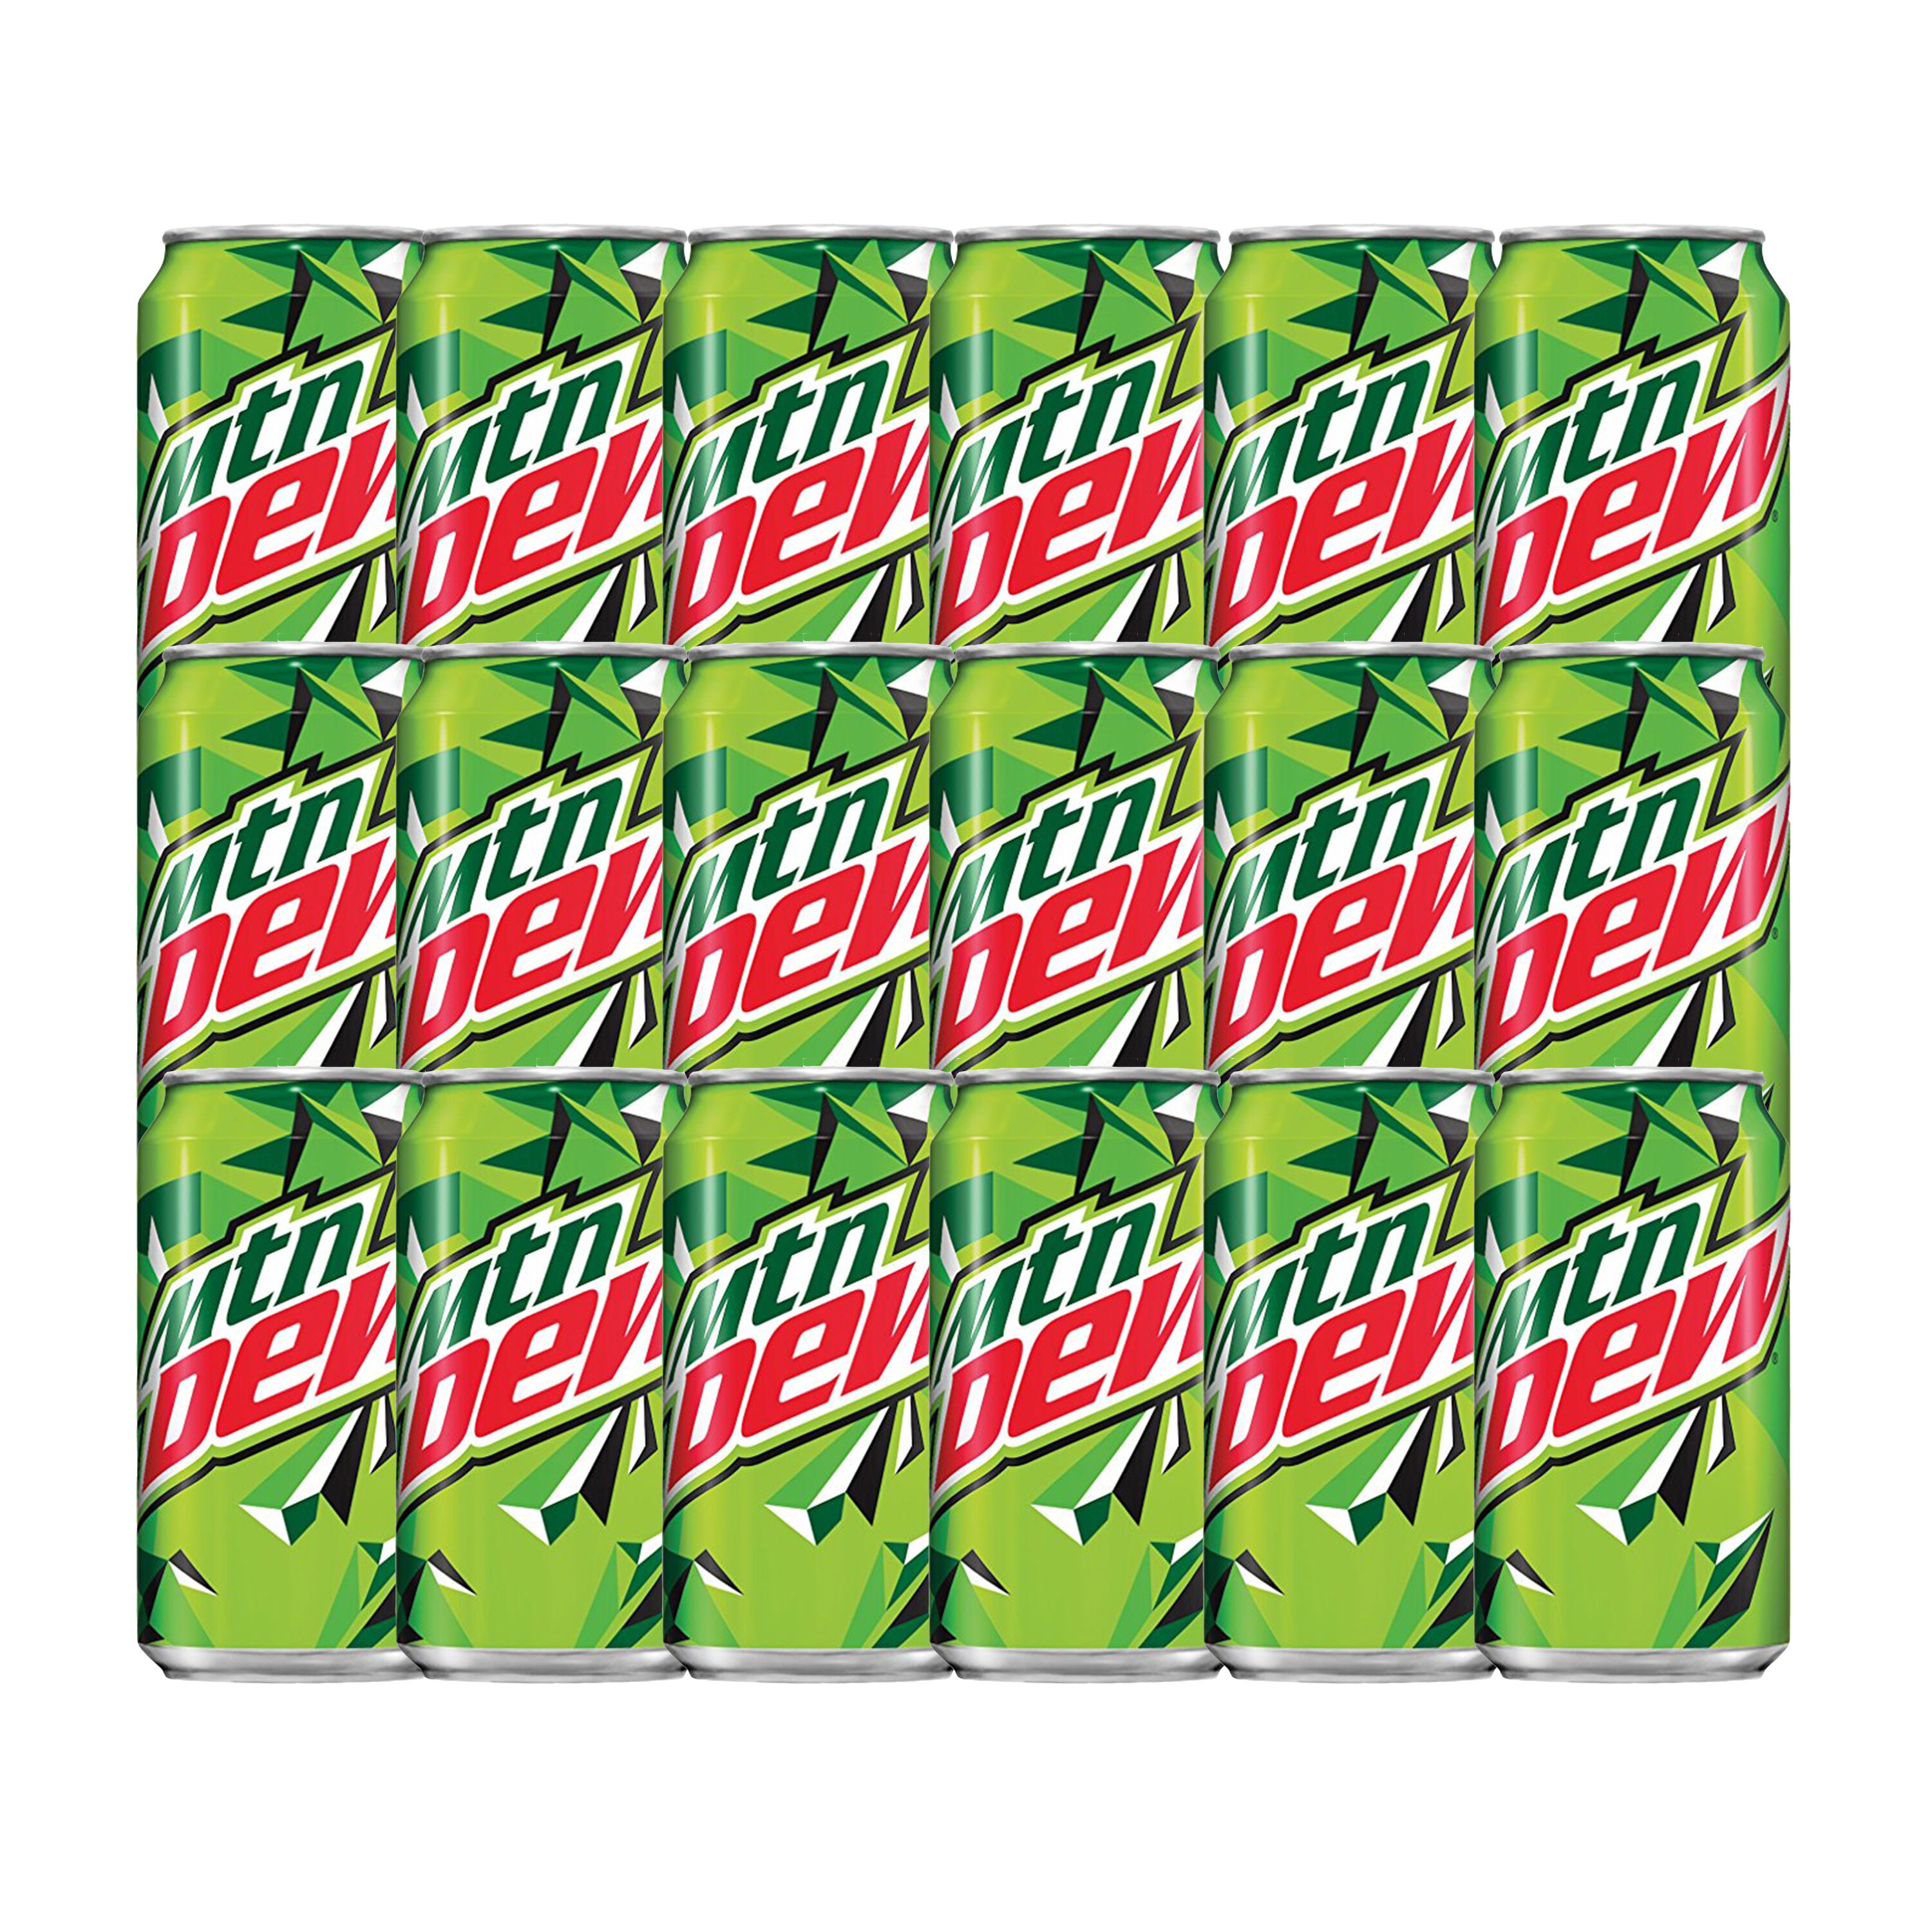 Mountain Dew Citrus Soda Pop, 12 fl oz, 18 Pack Cans - image 5 of 7